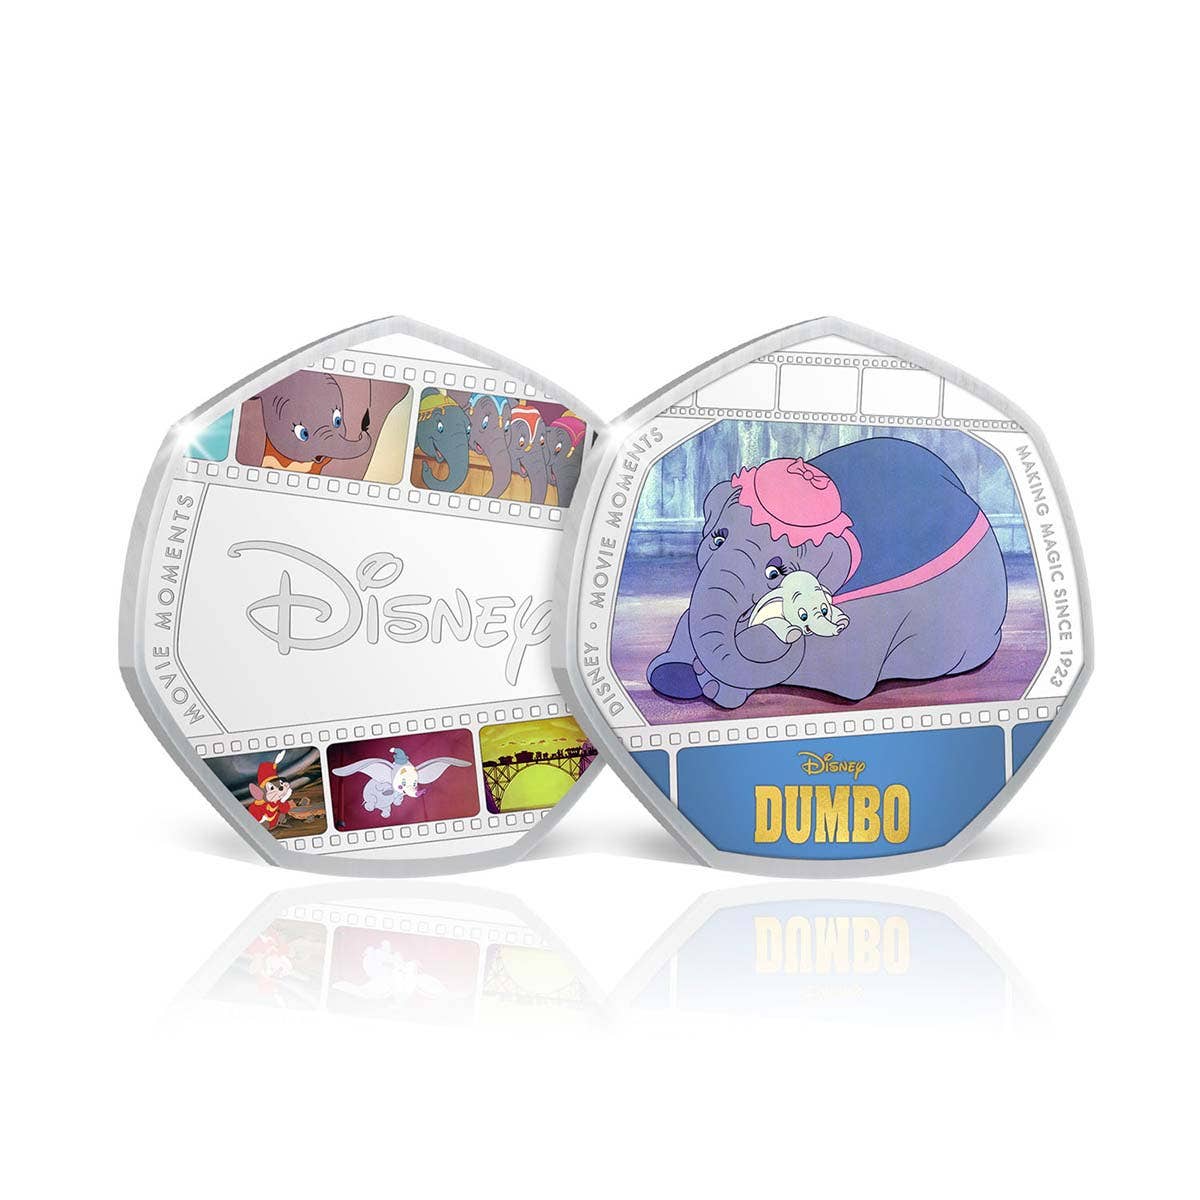 The Disney Movie Moments Complete Set - Dumbo